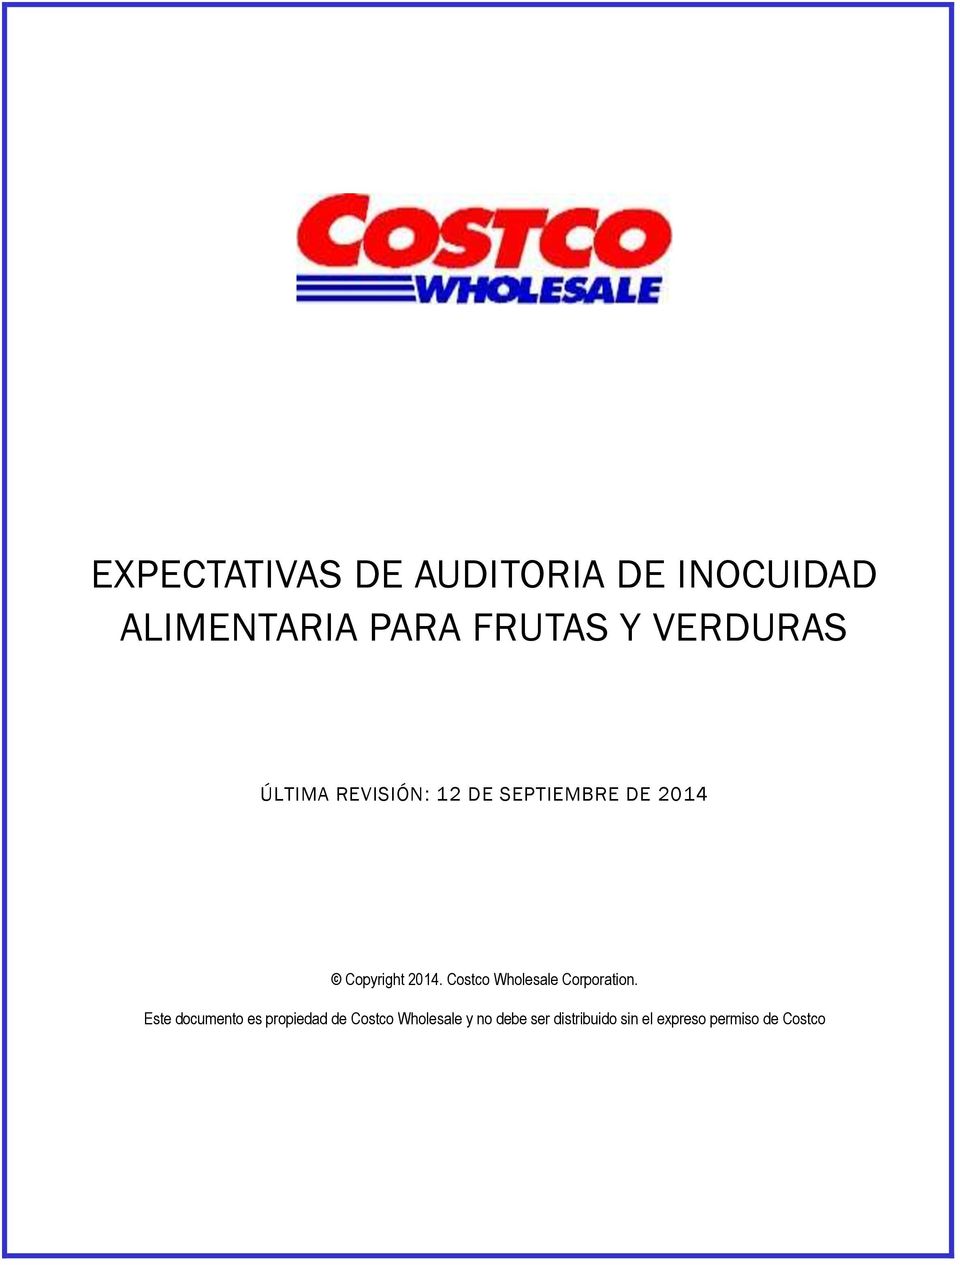 Costco Wholesale Corporation.